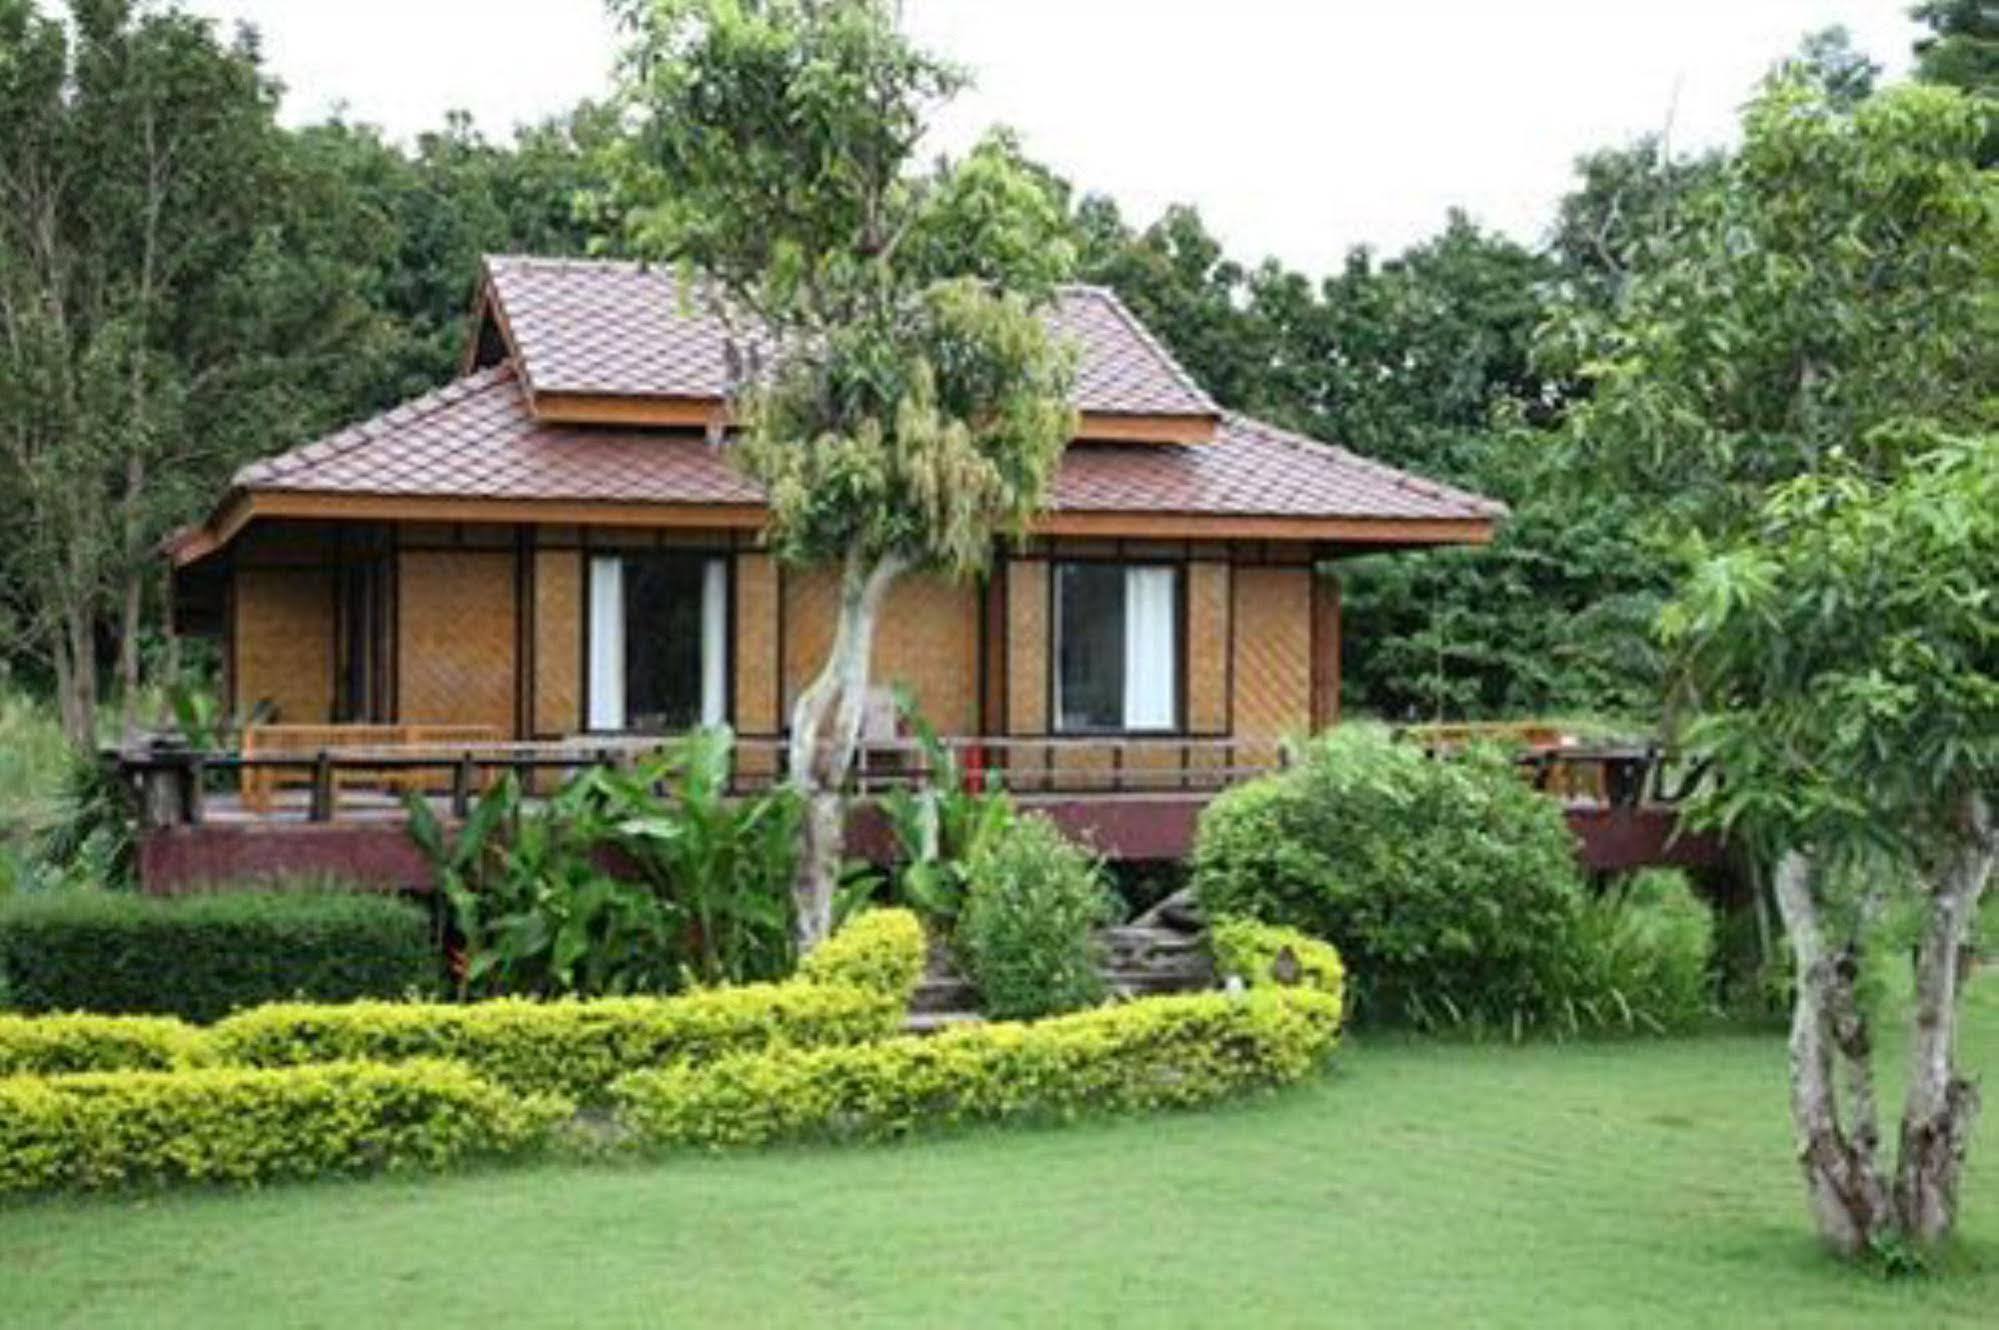 Baan Krating Pai Resort - Sha Plus Exterior photo